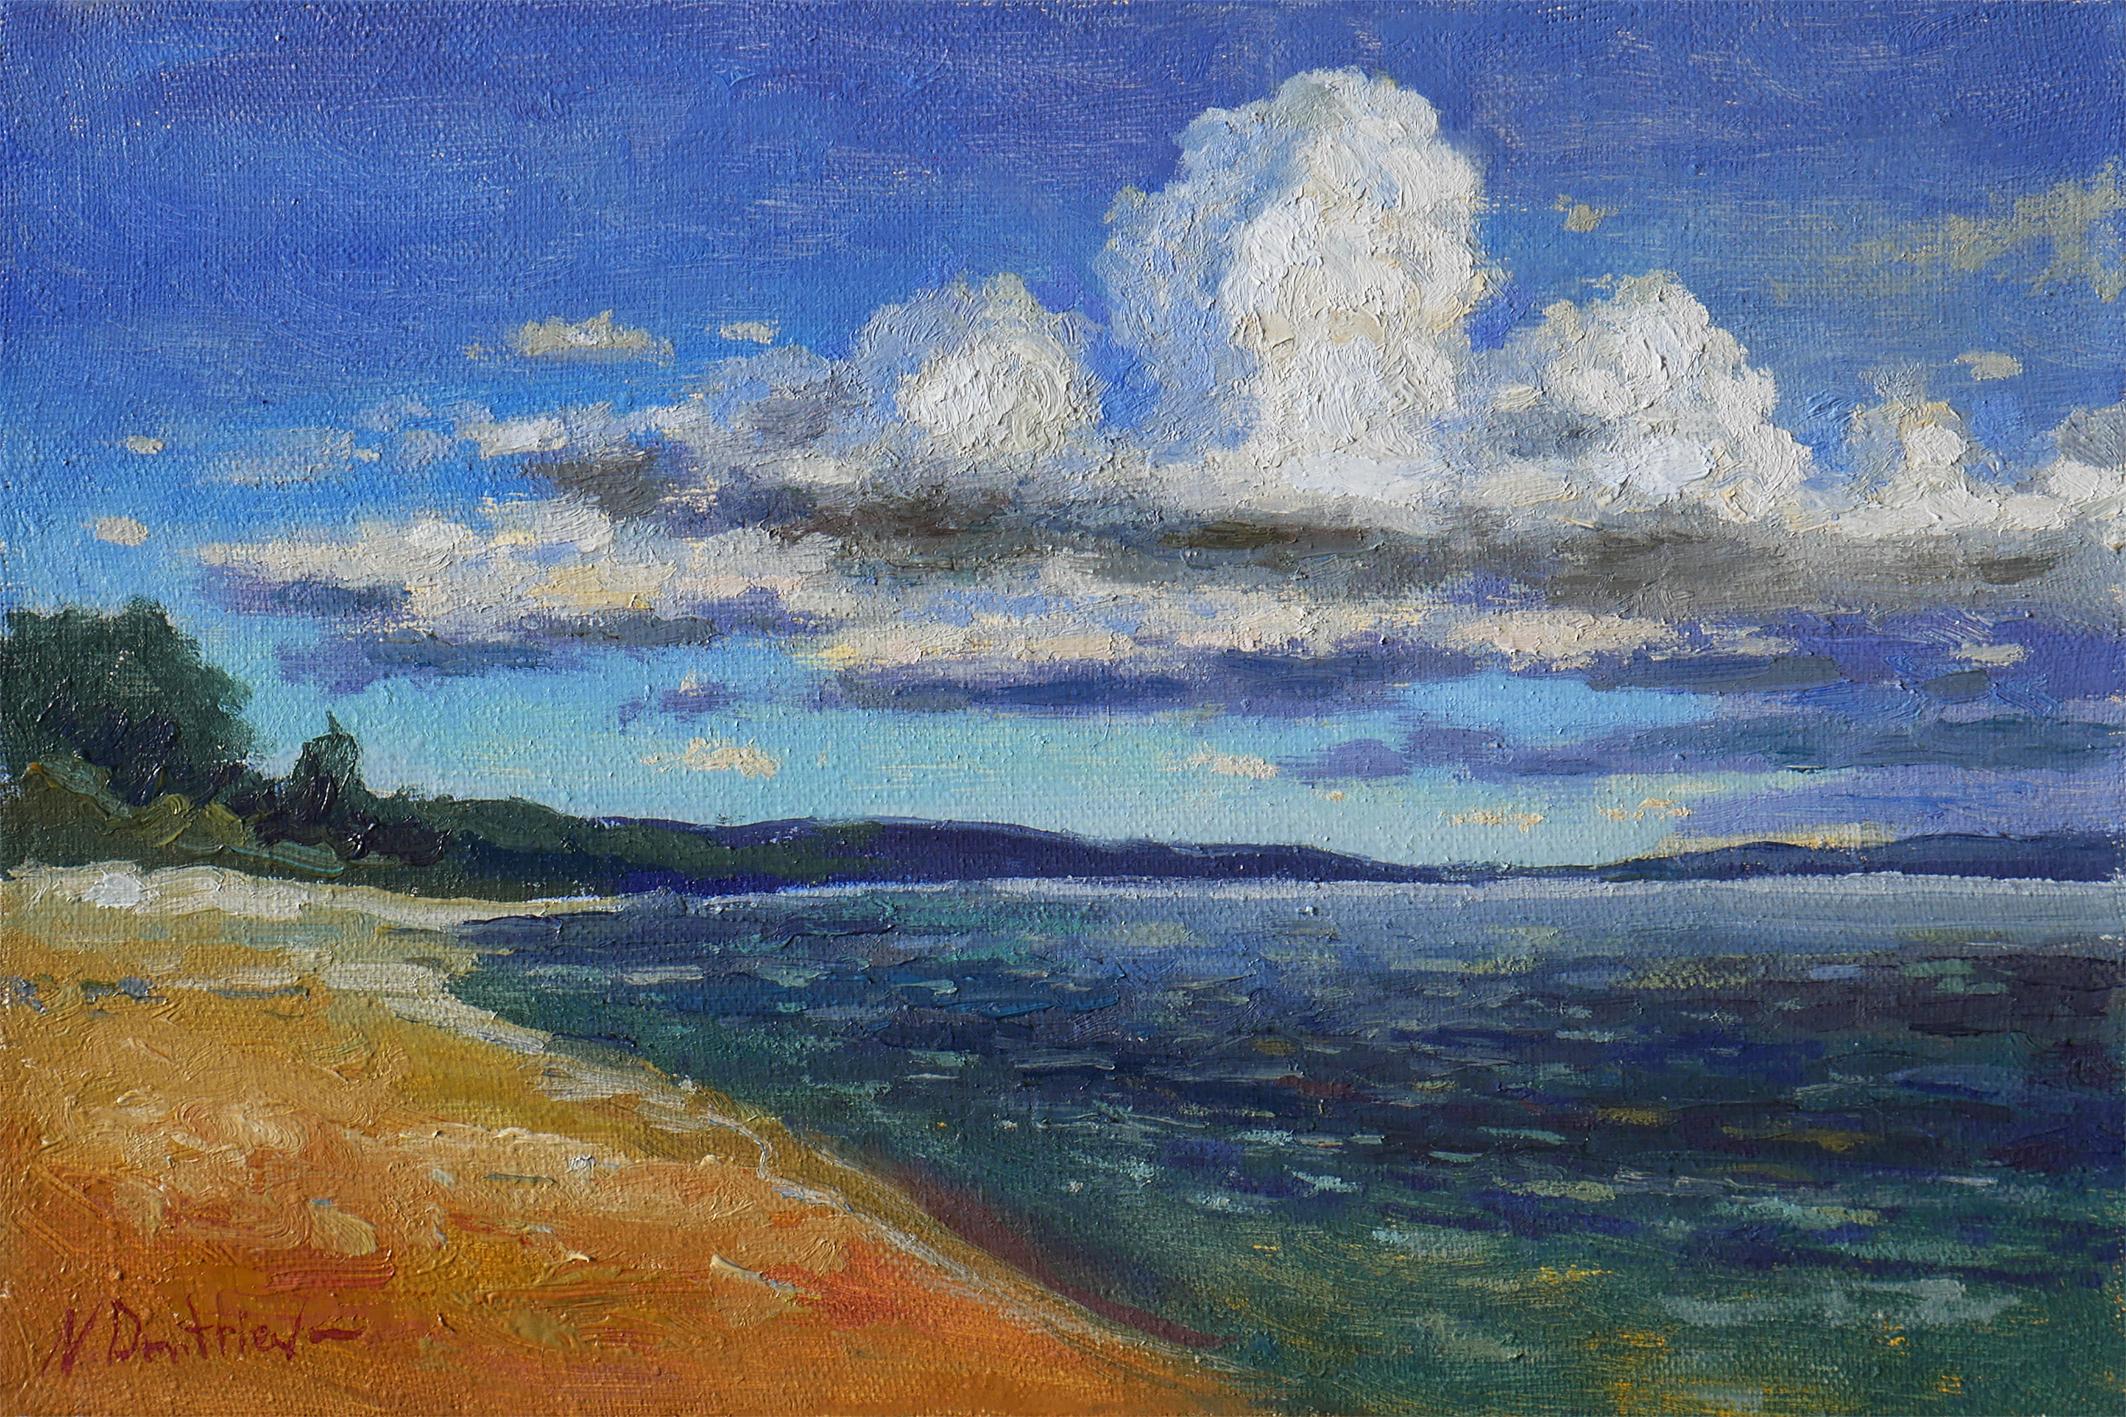 Interior Painting Nikolay Dmitriev - Nuages et mer - peinture de paysage marin